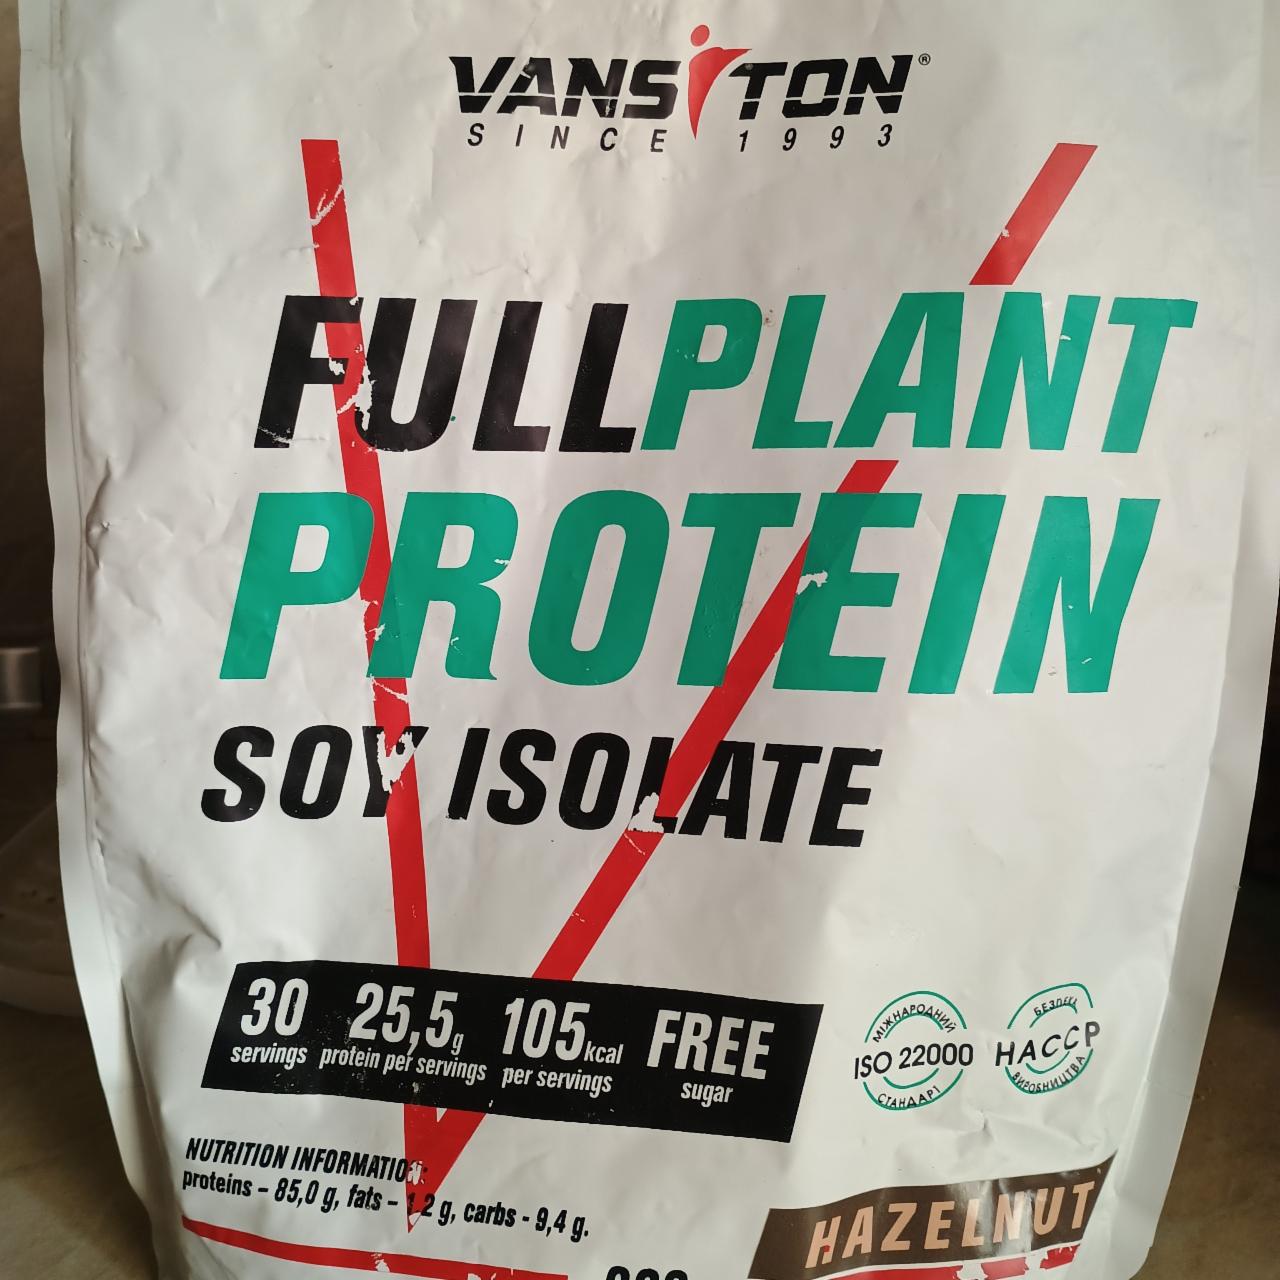 Фото - Fullplant protein soy isolate hazelnut Vansiton